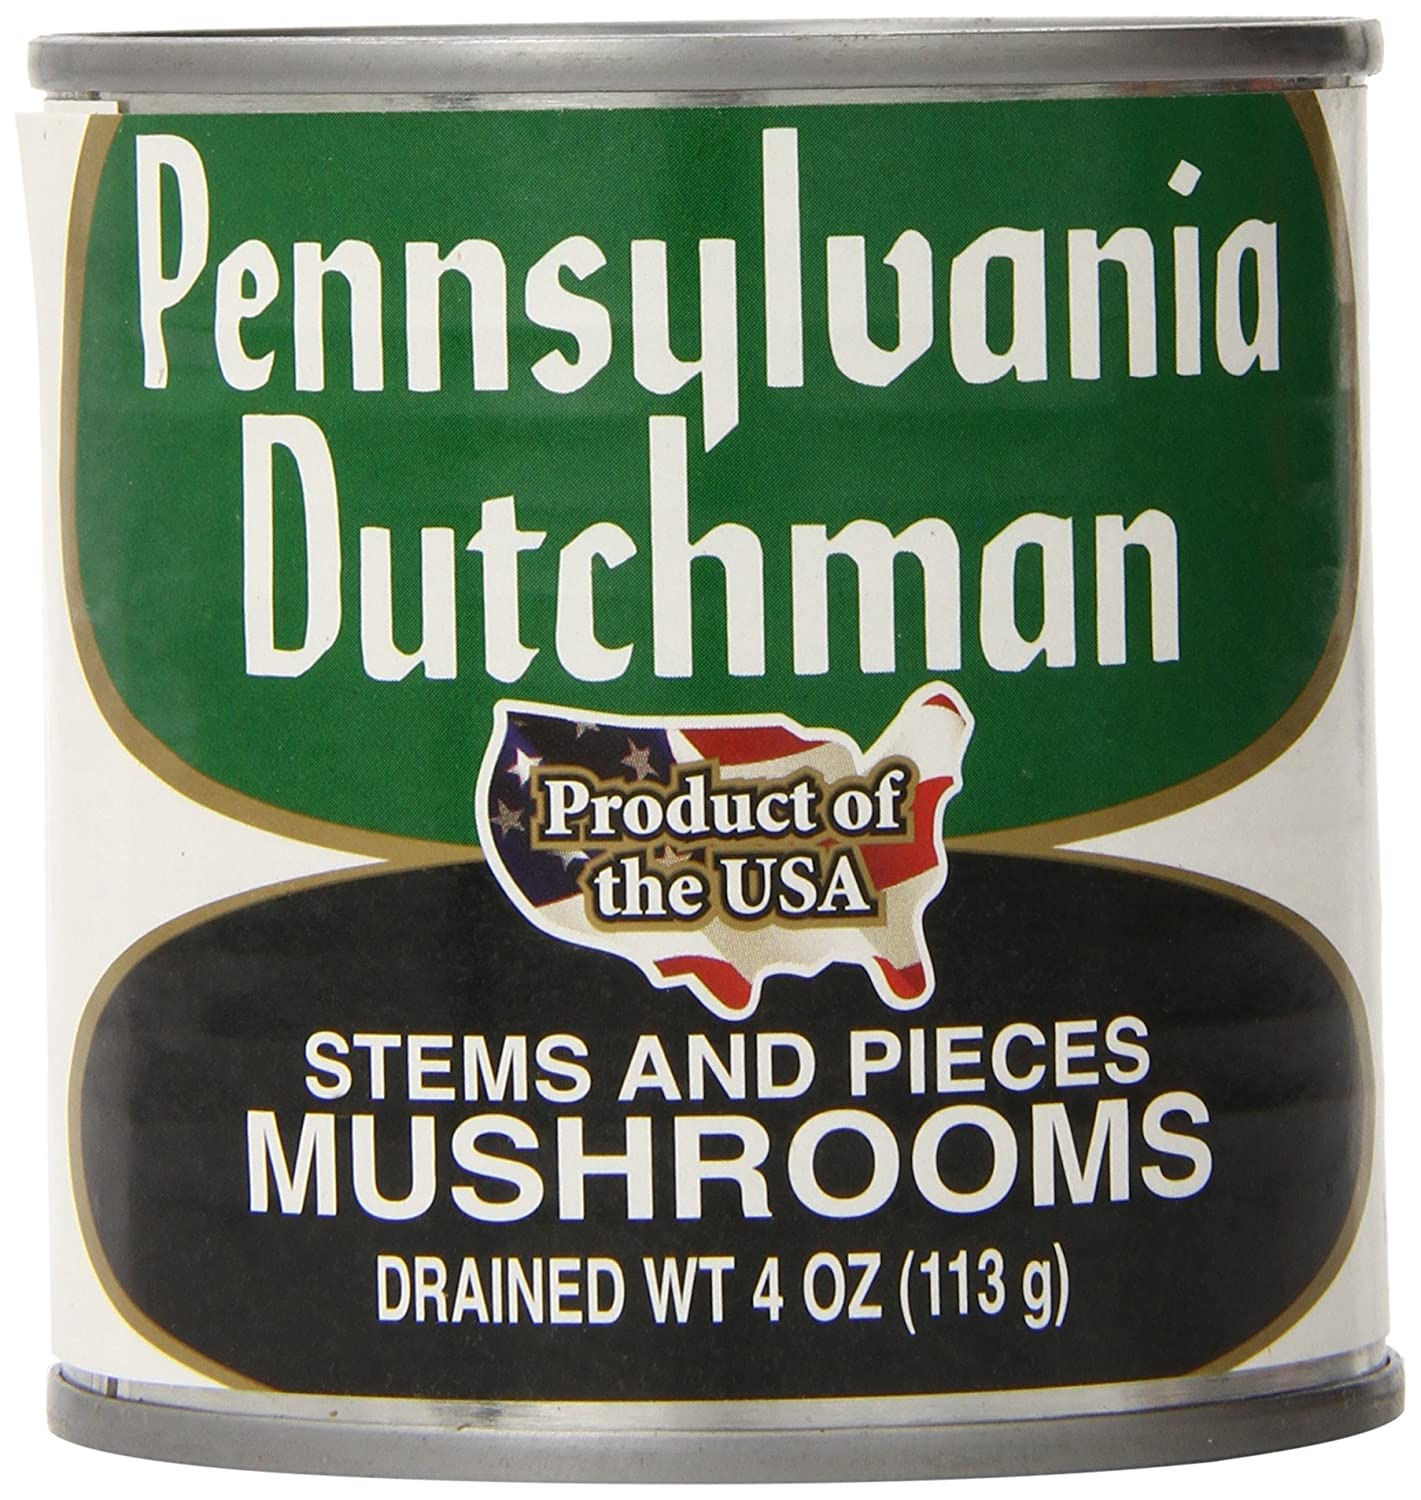 Pennsylvania Dutchman Canned Mushrooms